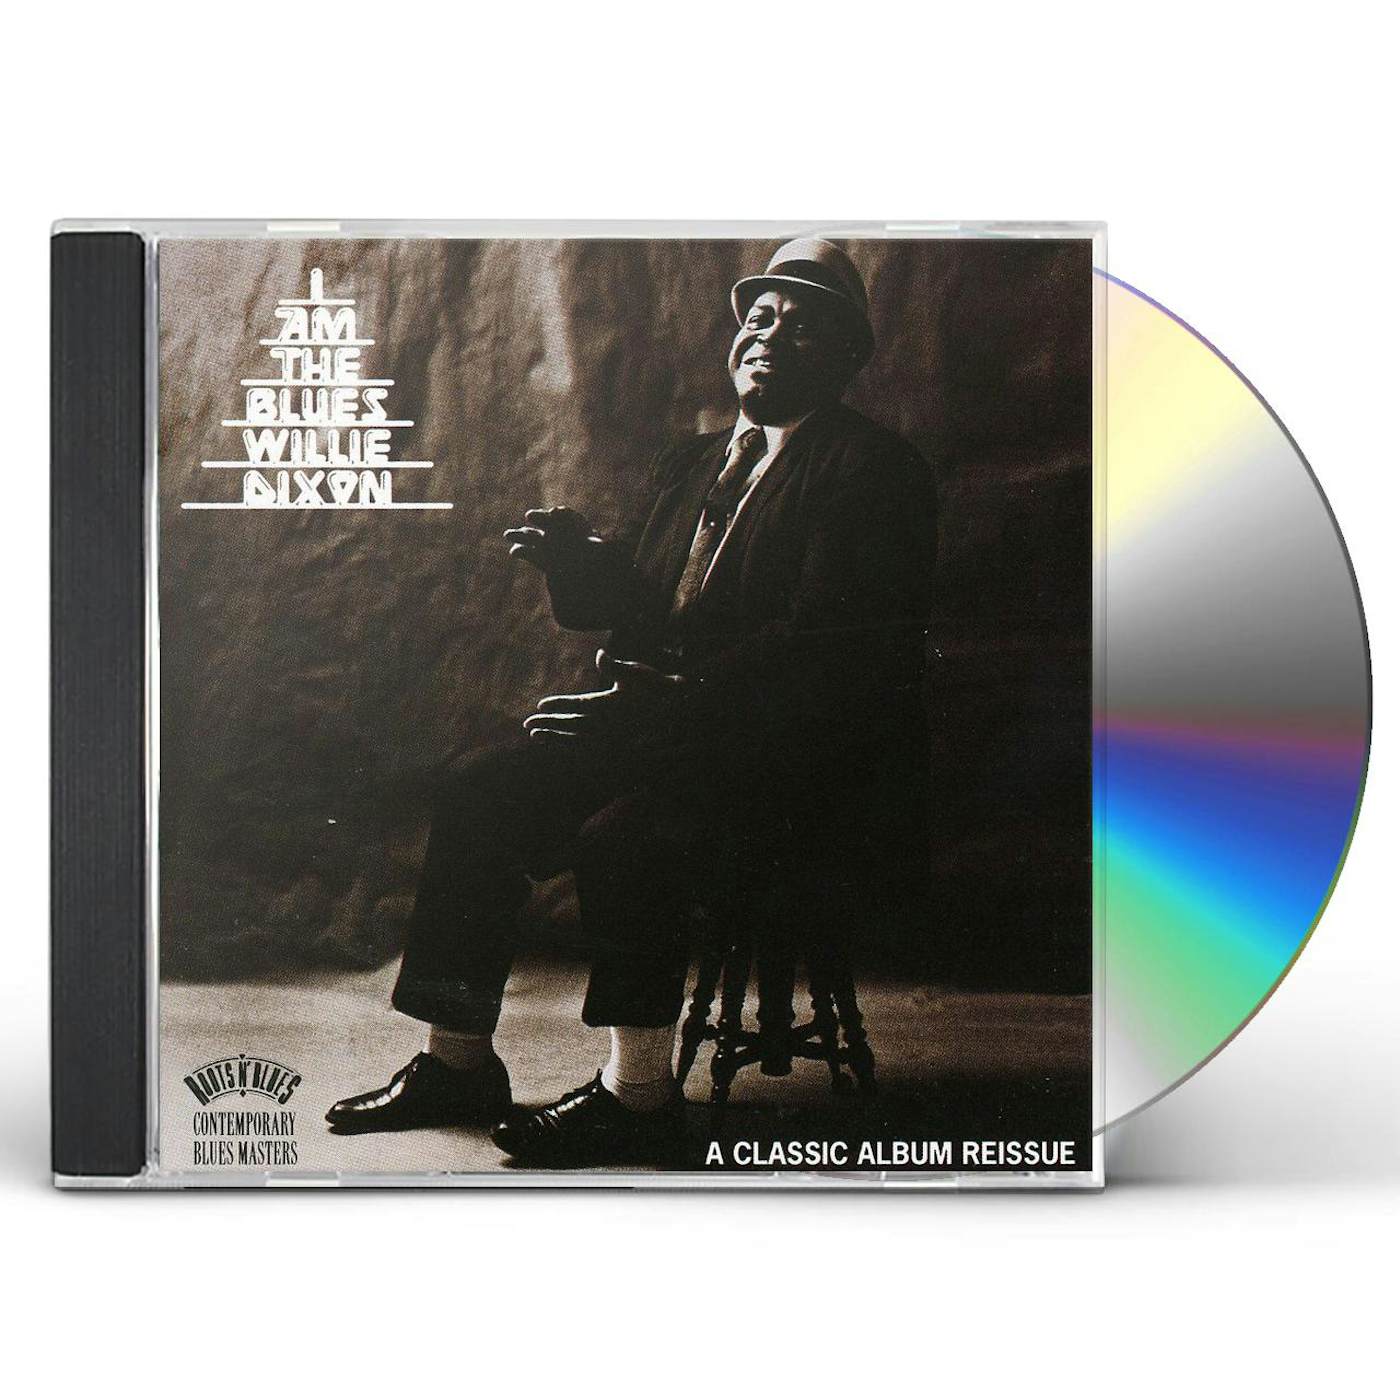 Willie Dixon I M THE BLUES CD